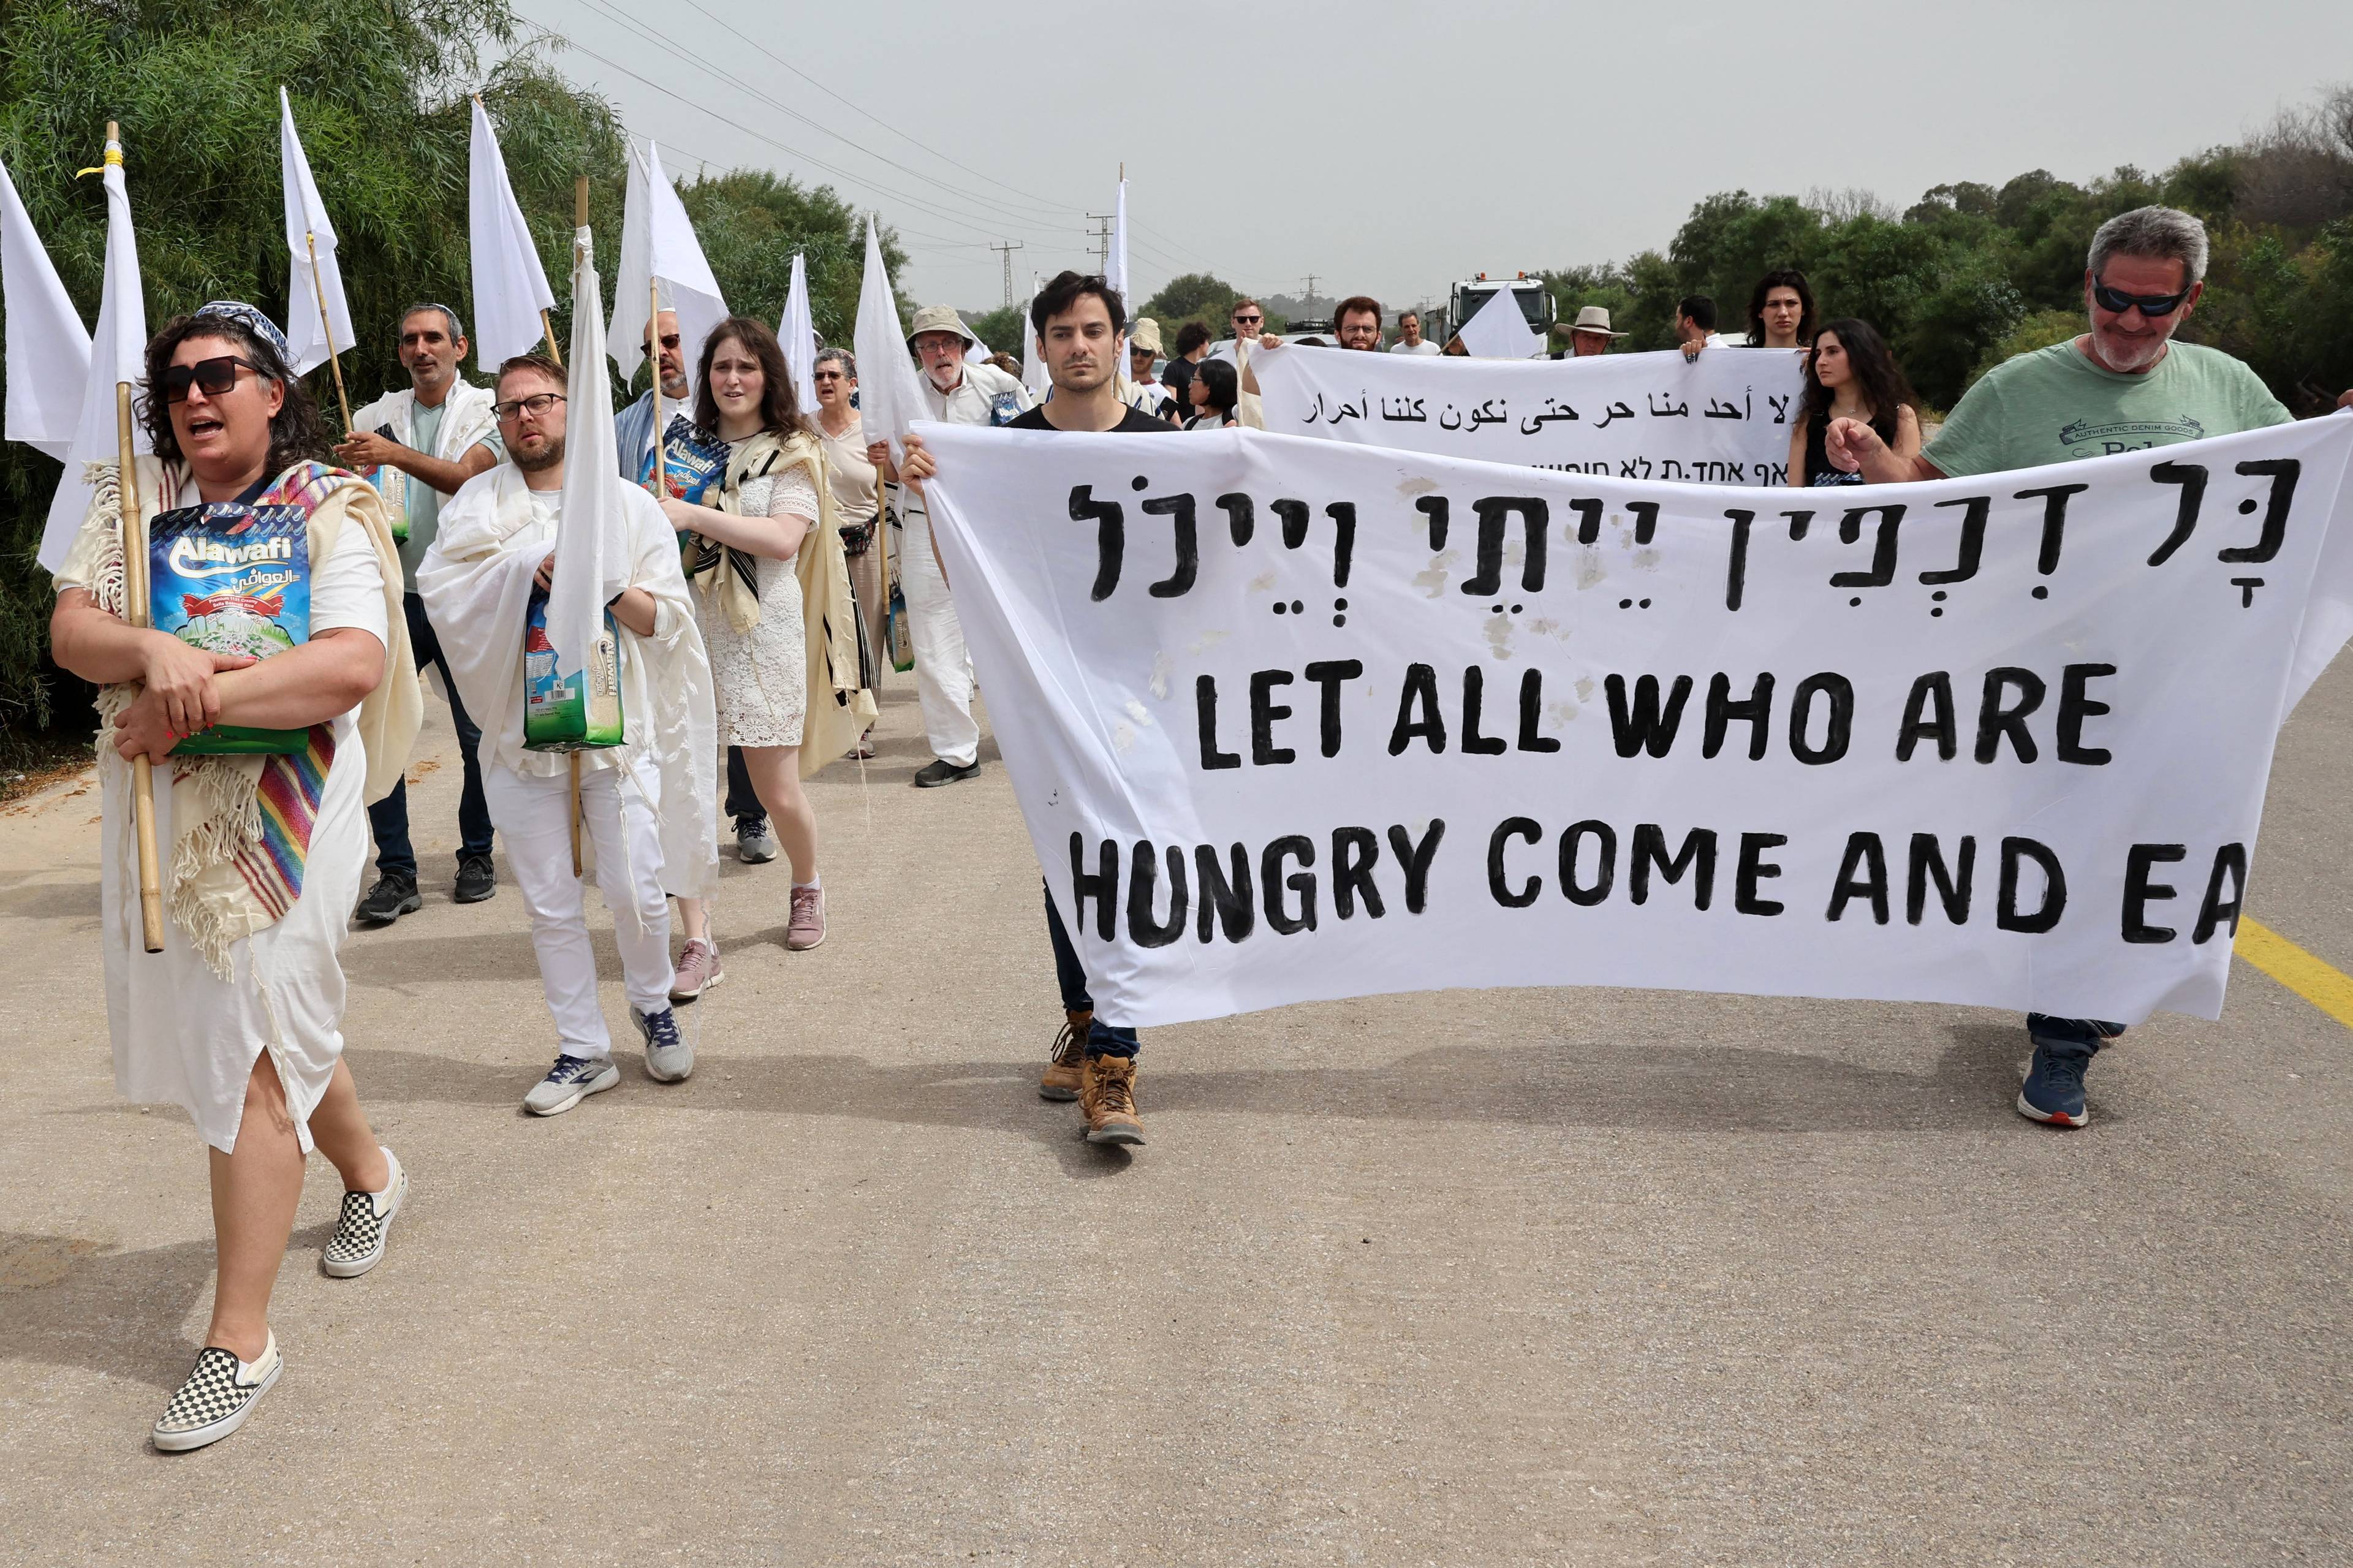 ubrani na biało protestujący niosą napis "let all who are hungry come and eat"